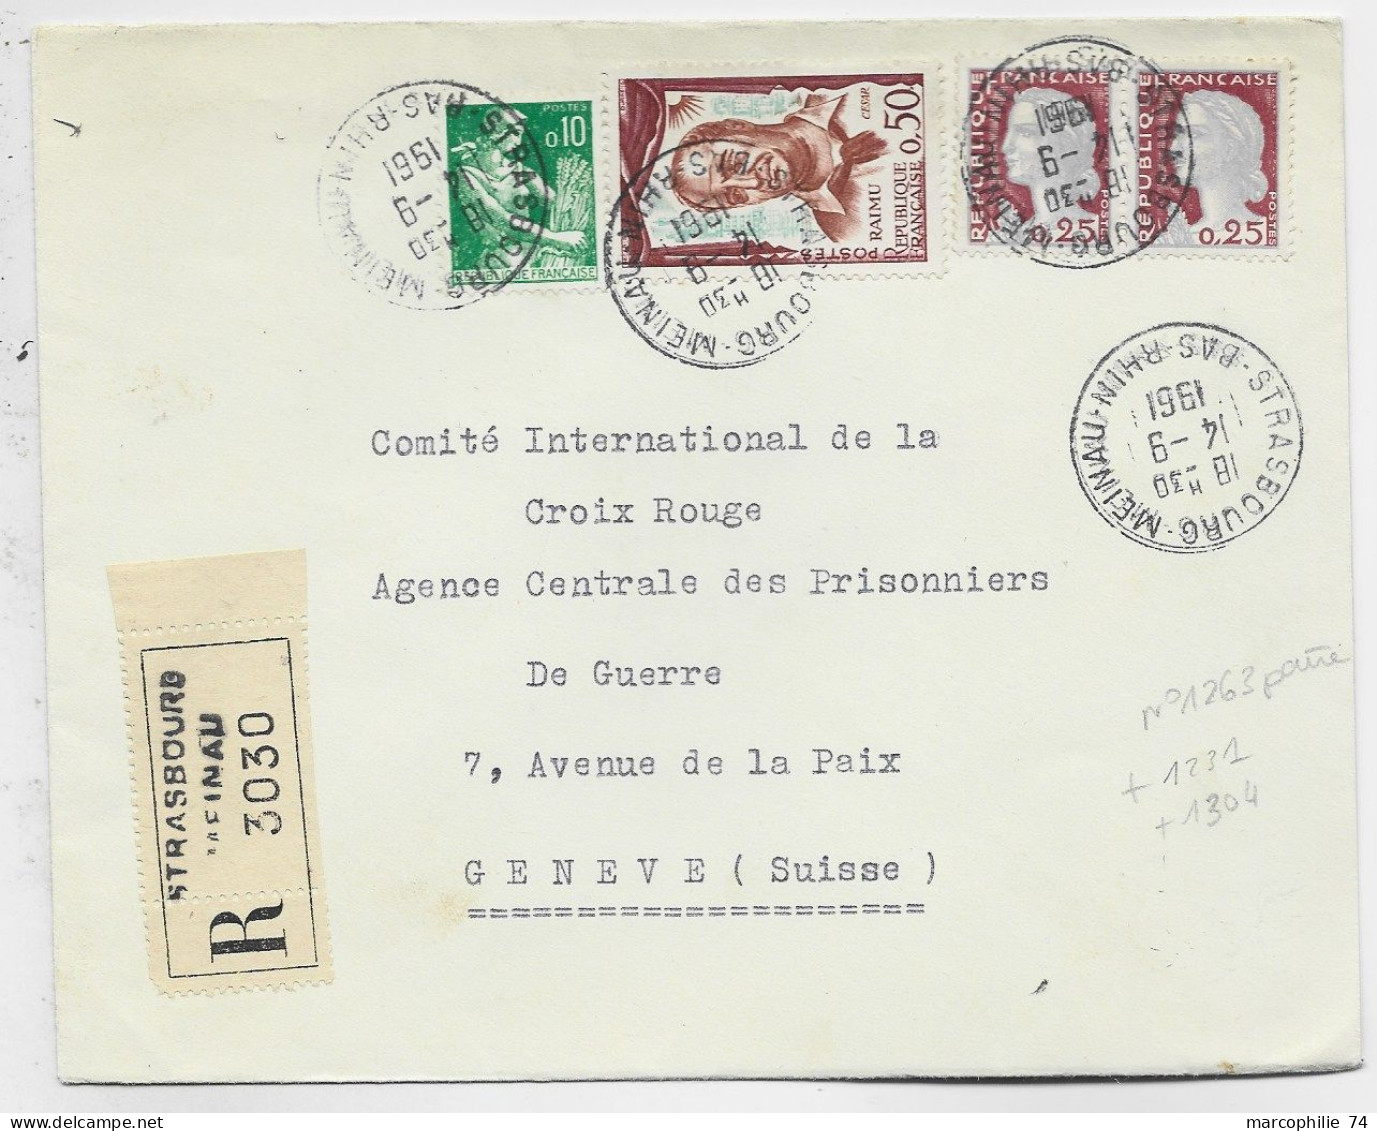 MARIANNE DECARIS 25CPAIRE +10C +50C RAIMU LETTRE REC STRASBOURG 14.9.1961  POUR SUISSE AU TARIF - 1960 Marianne De Decaris